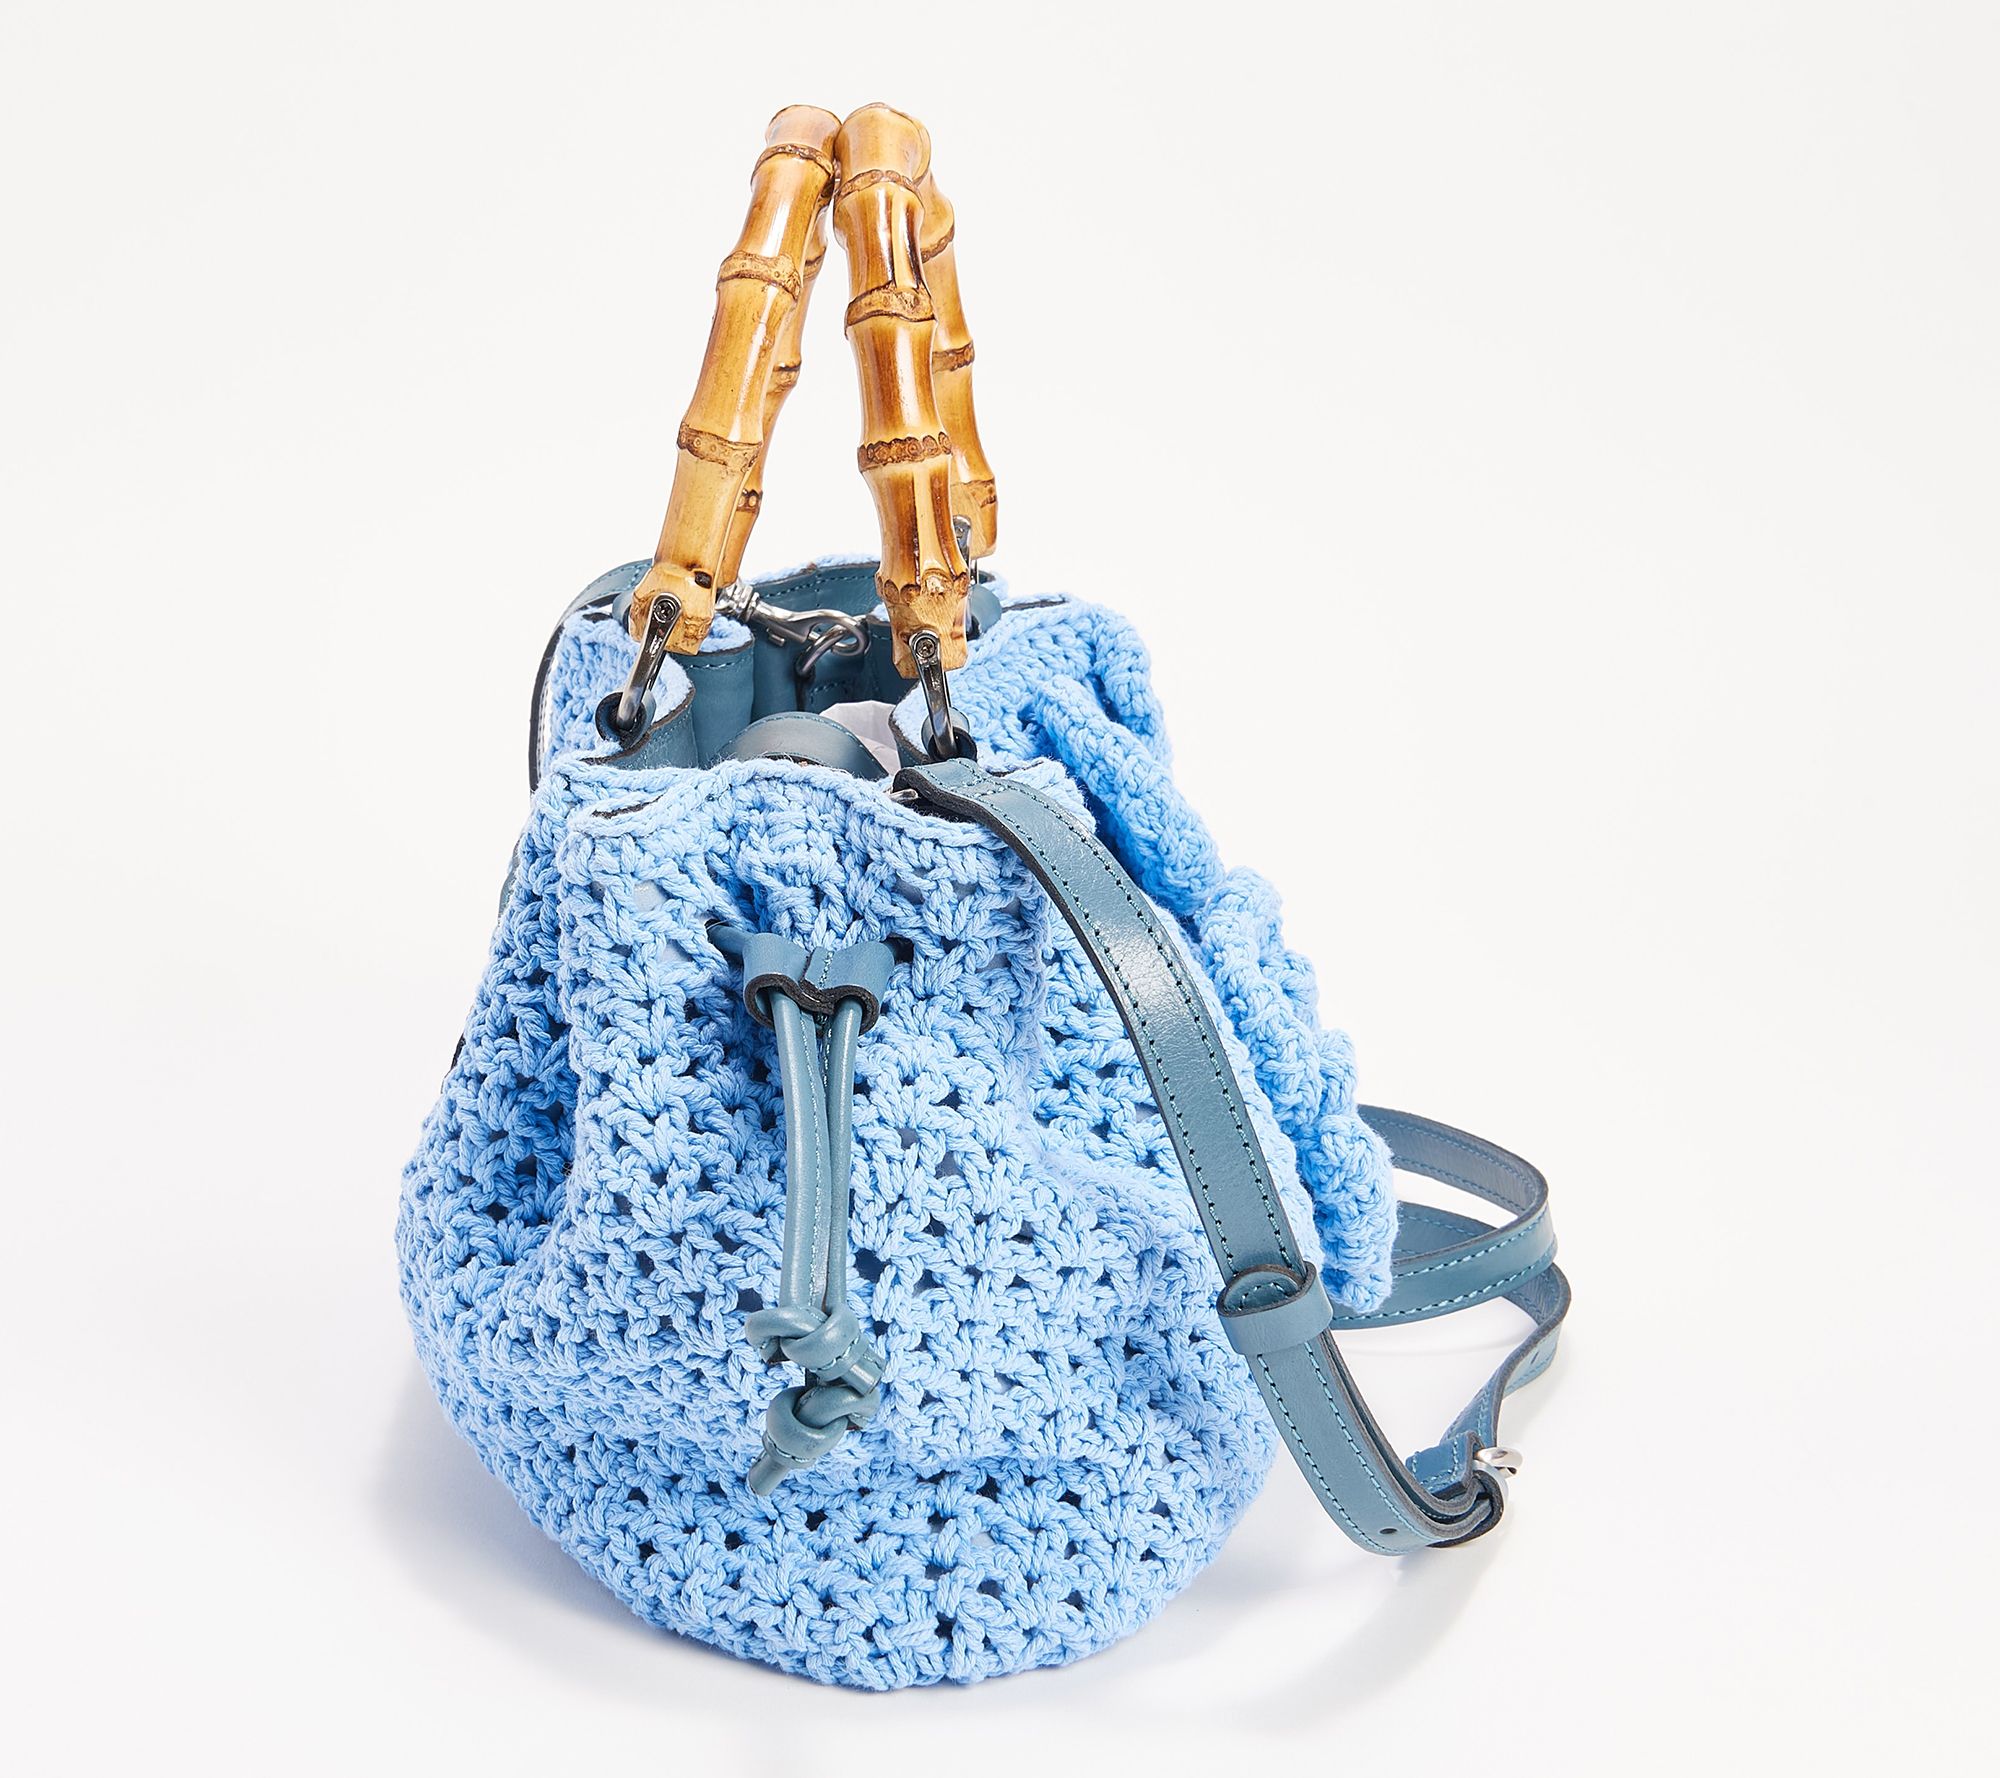 Darling Spring Weekend Shopper Crochet Beach Bag